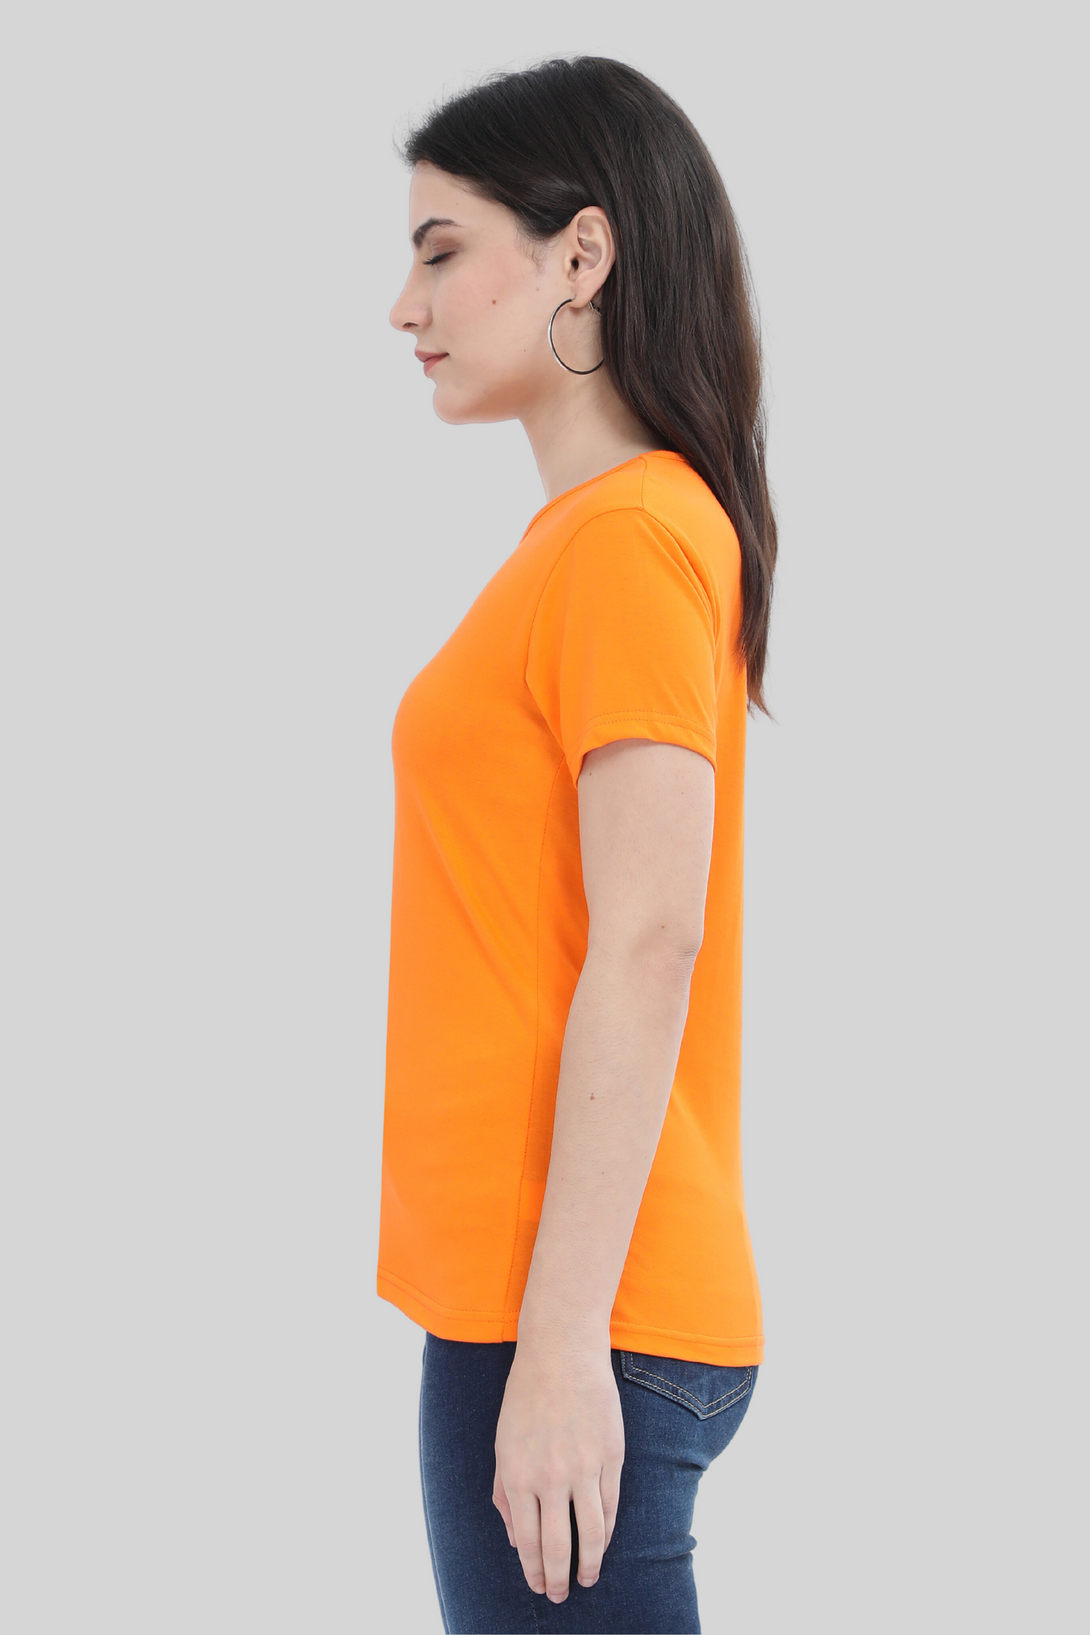 Orange Scoop Neck T-Shirt For Women - WowWaves - 2